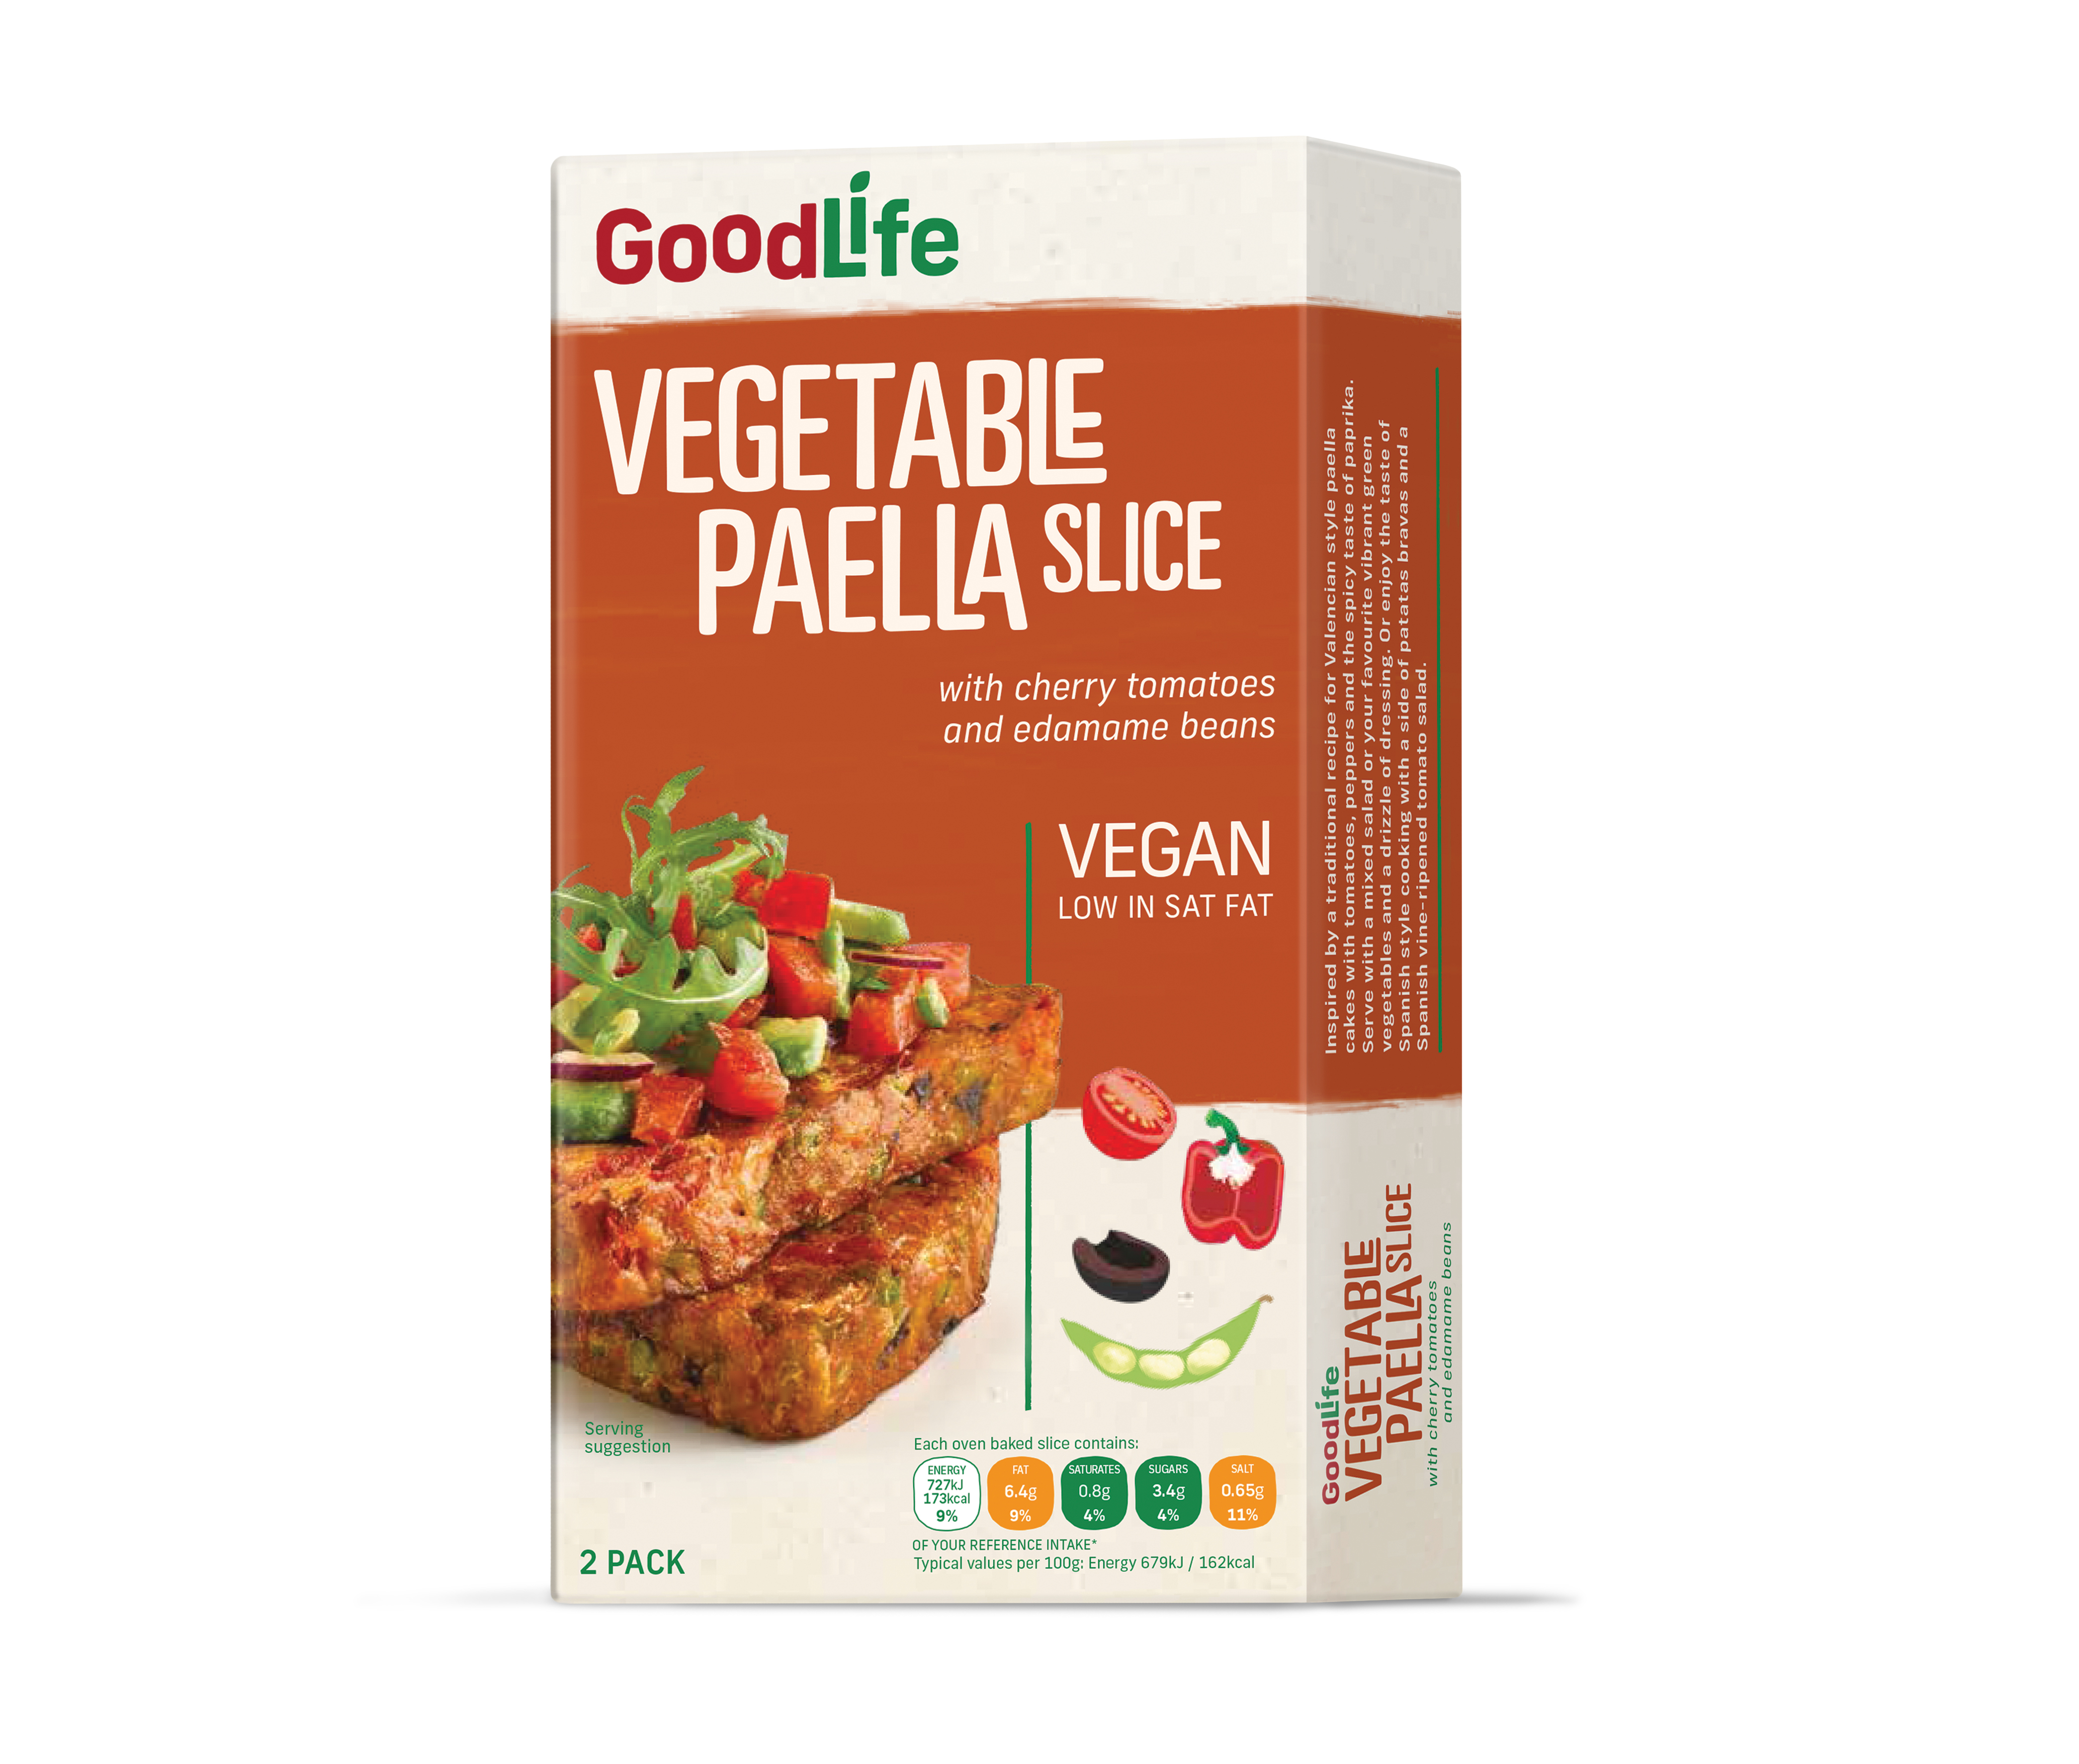 Goodlife Vegetable paella slice image